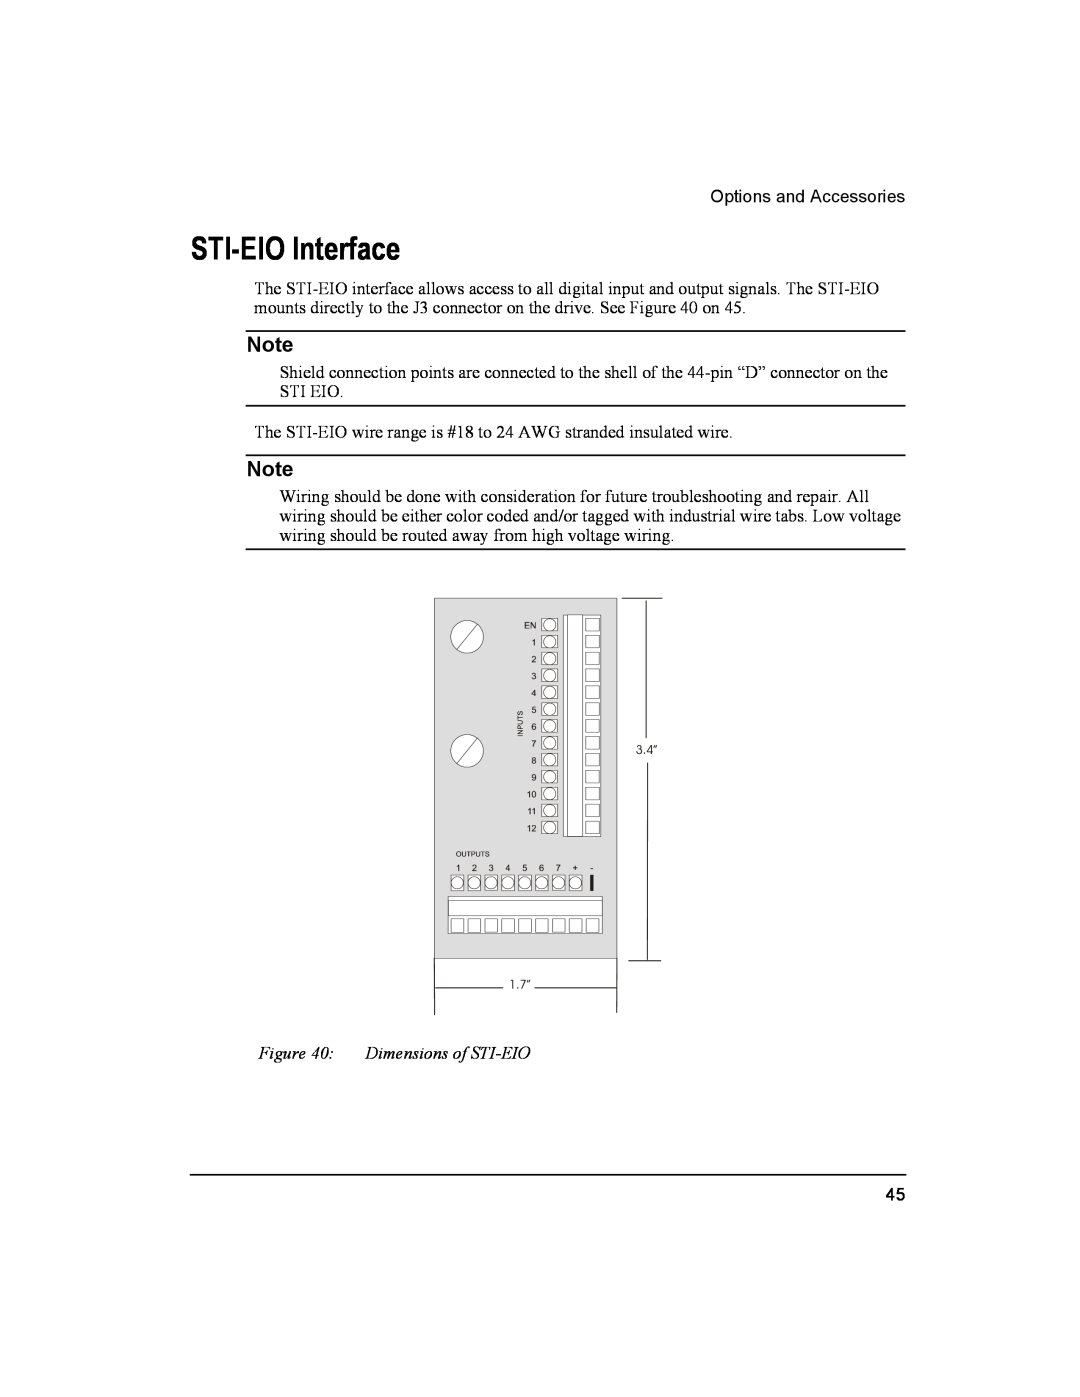 Emerson Epsilon Eb Digital Servo Drive, 400501-05 STI-EIO Interface, Options and Accessories, Dimensions of STI-EIO 